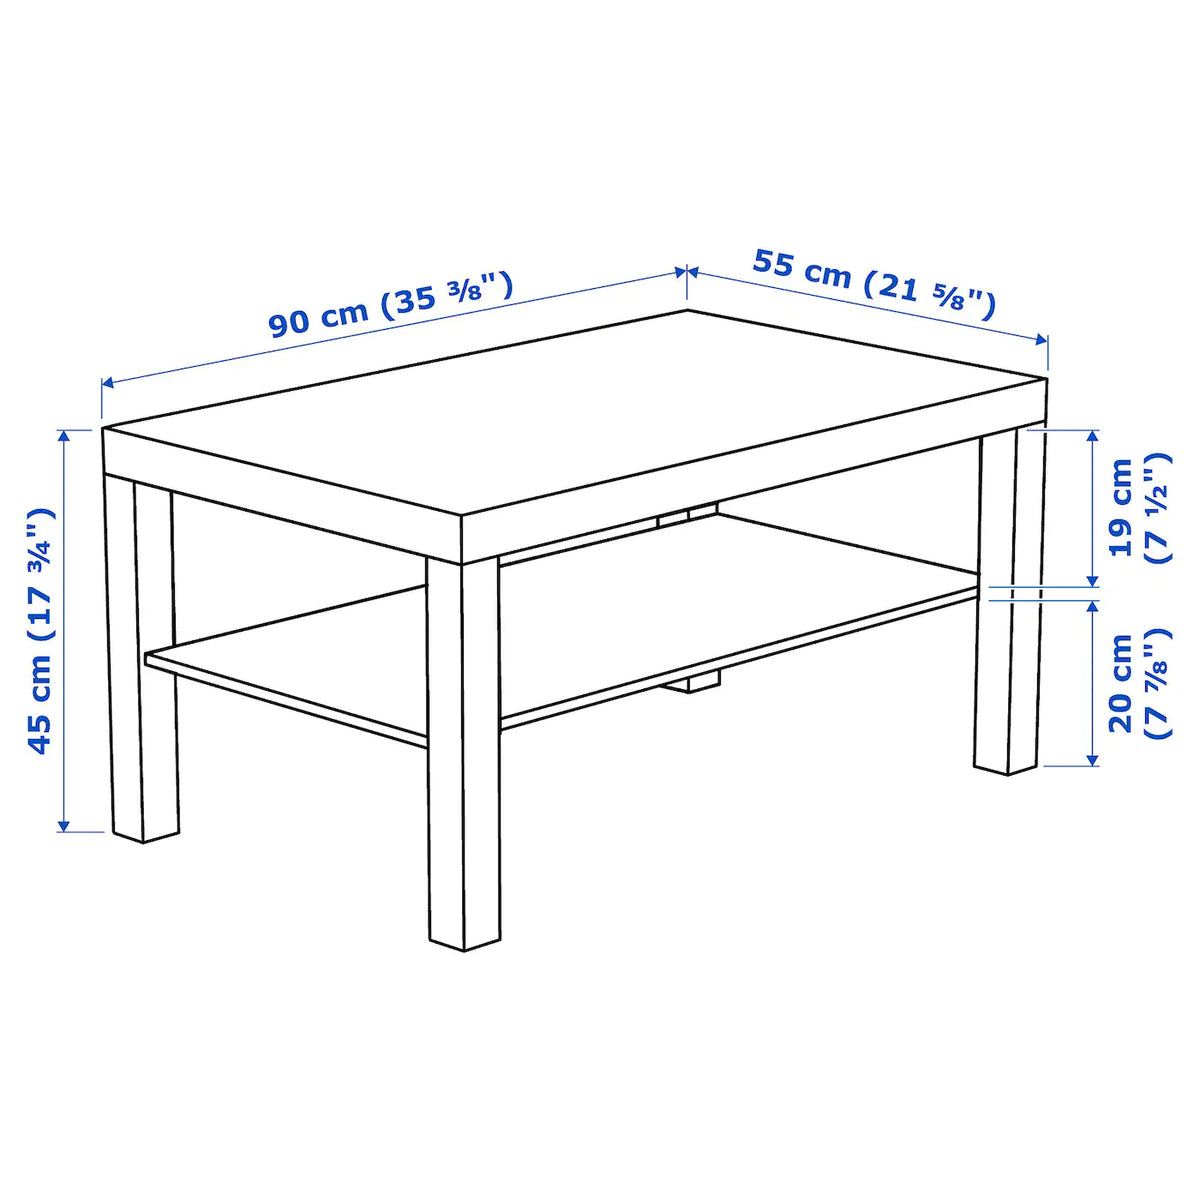 IKEA LACK coffee table, white, 90x55 cm